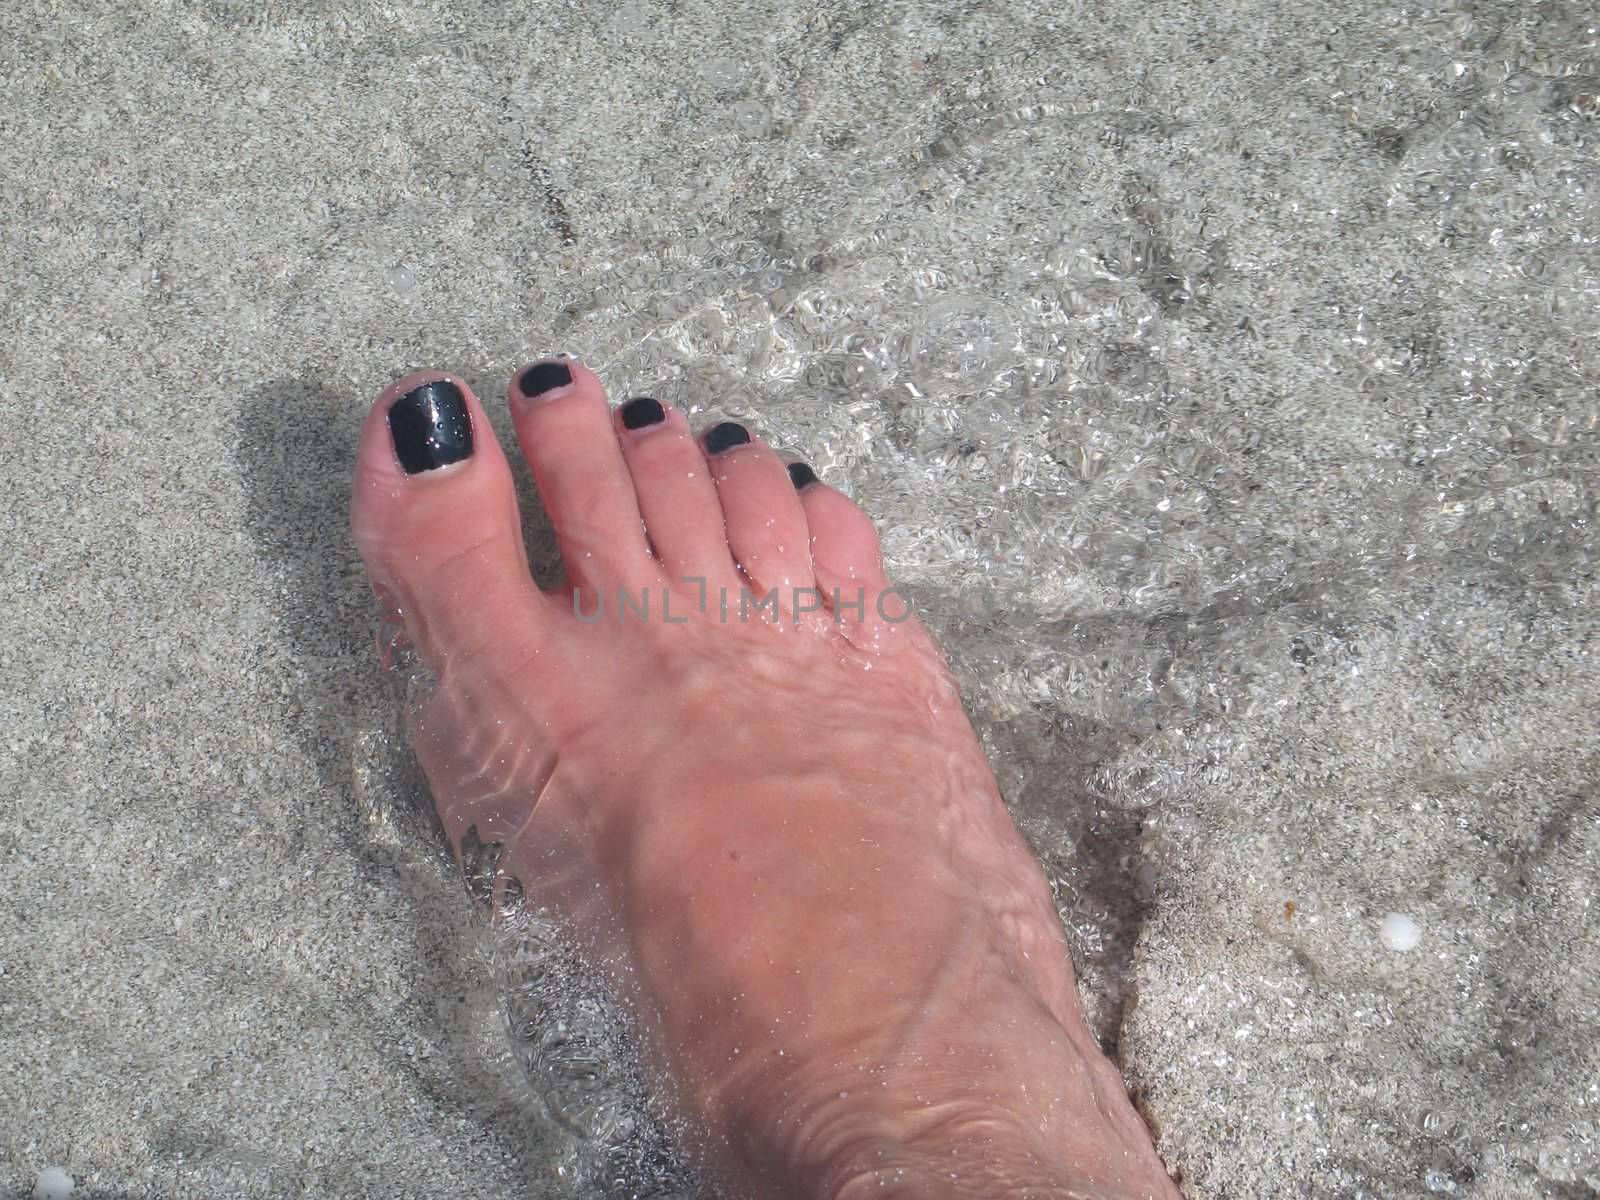 female's feet in the ocean